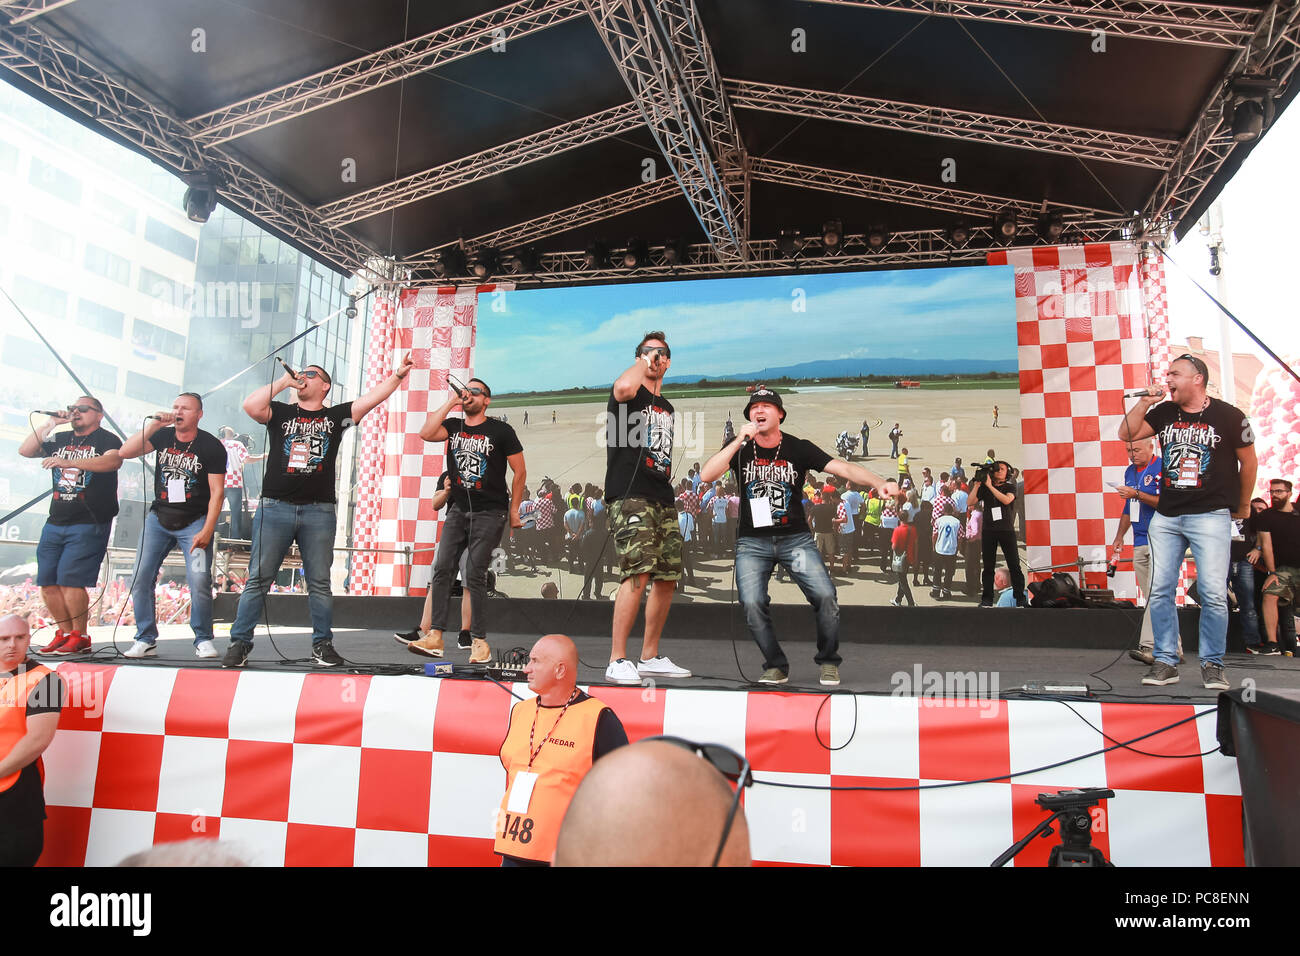 ZAGREB, CROATIA - JULY 16, 2018 : Croatia National Football Team welcome home celebration. Zapresic boys fan band singing on the stage. Stock Photo